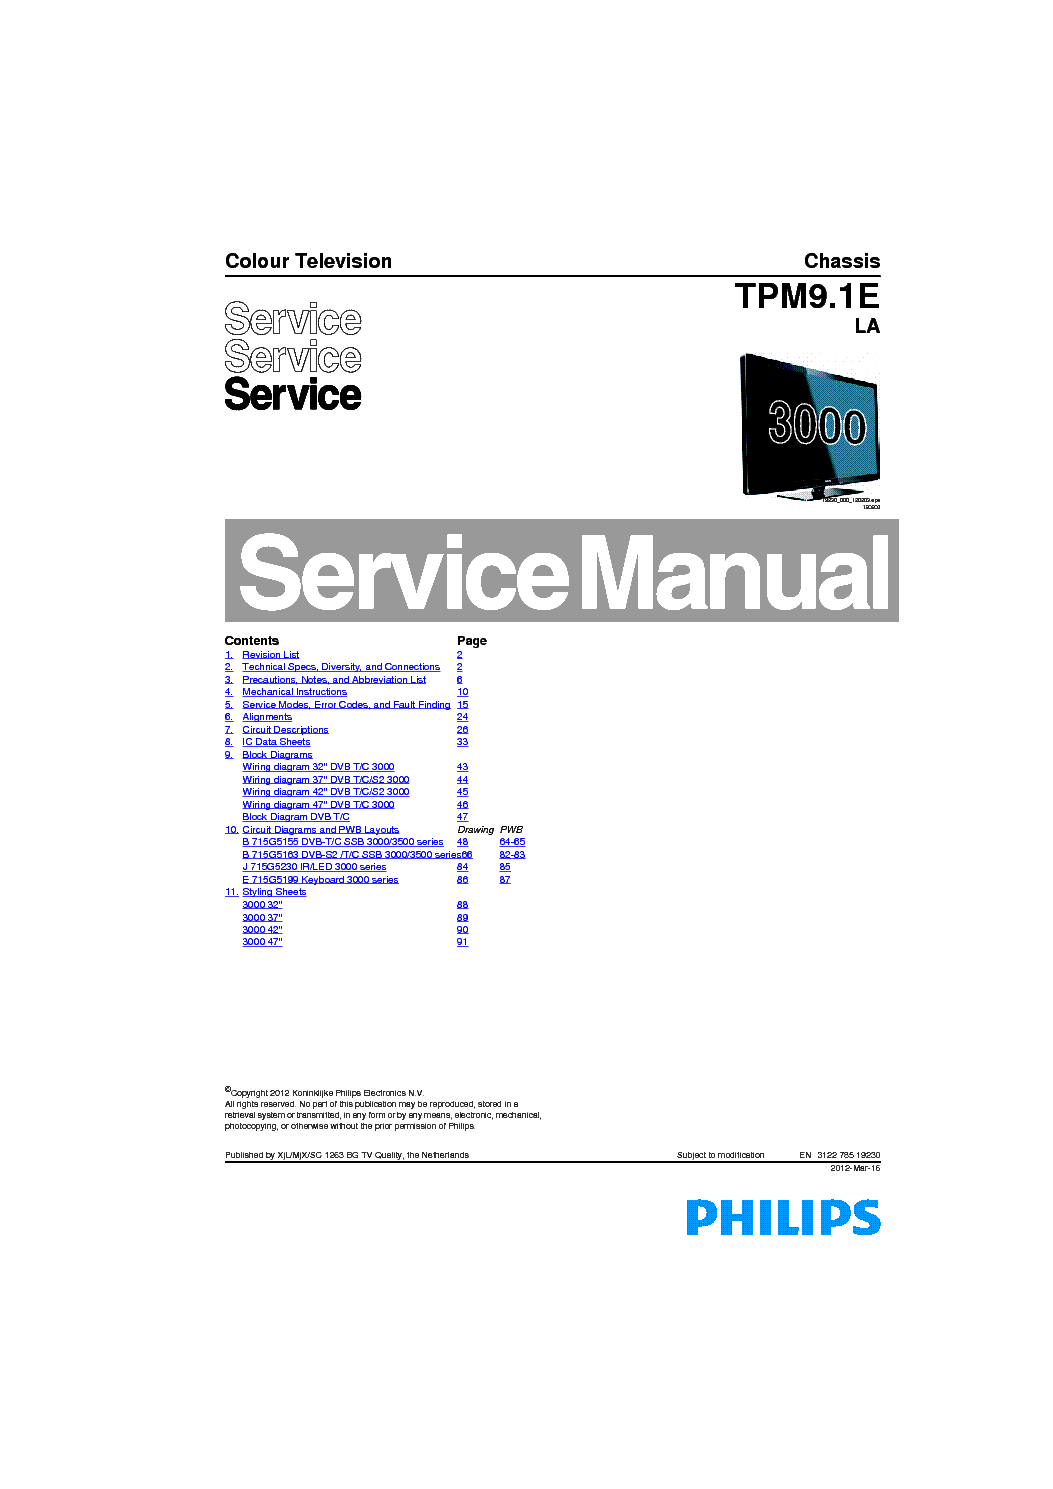 PHILIPS CHASSIS TPM9.1E LA service manual (1st page)